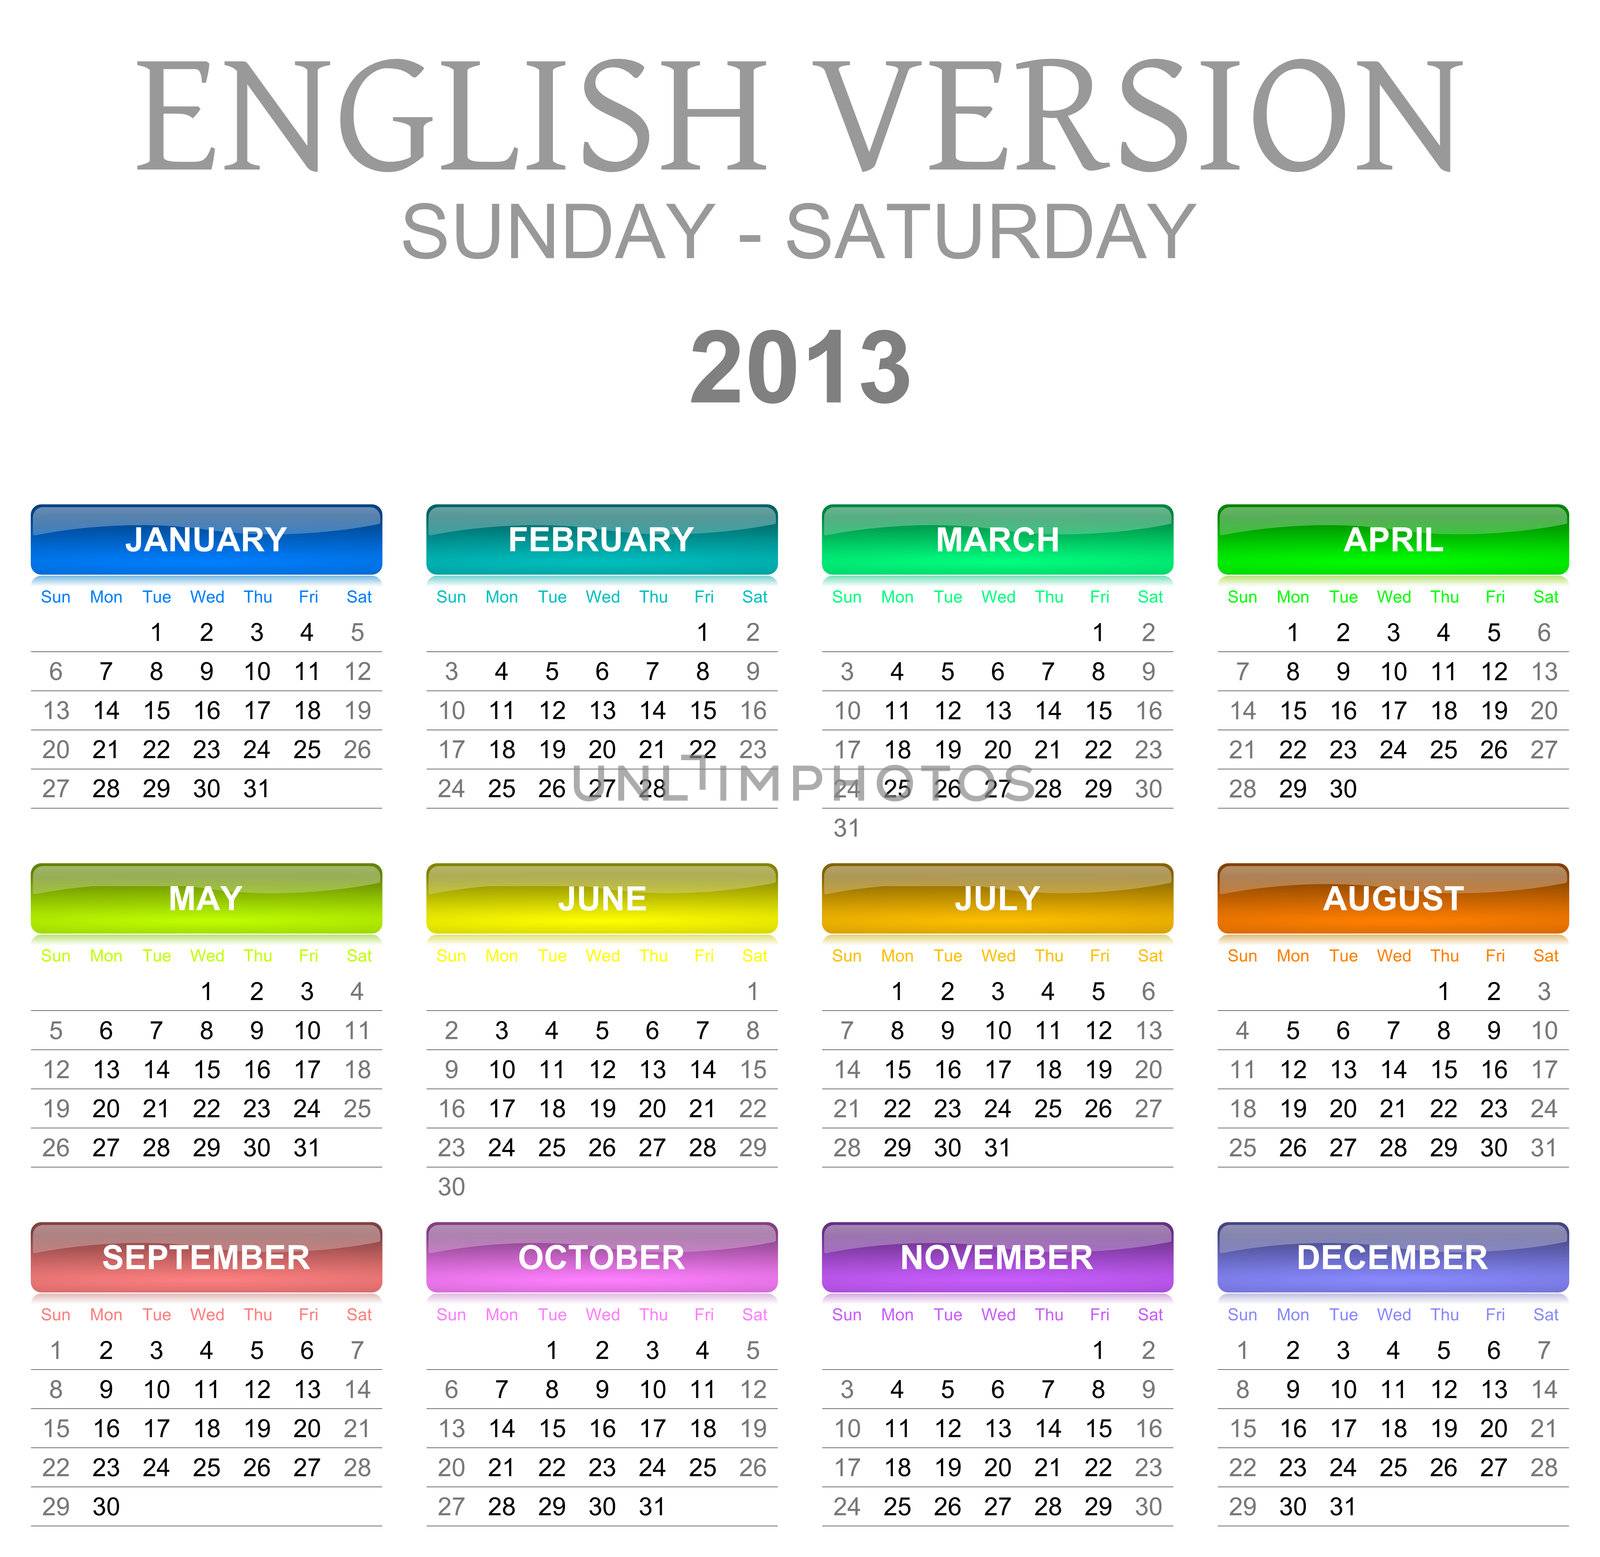 2013 calendar english version sun - sat by make